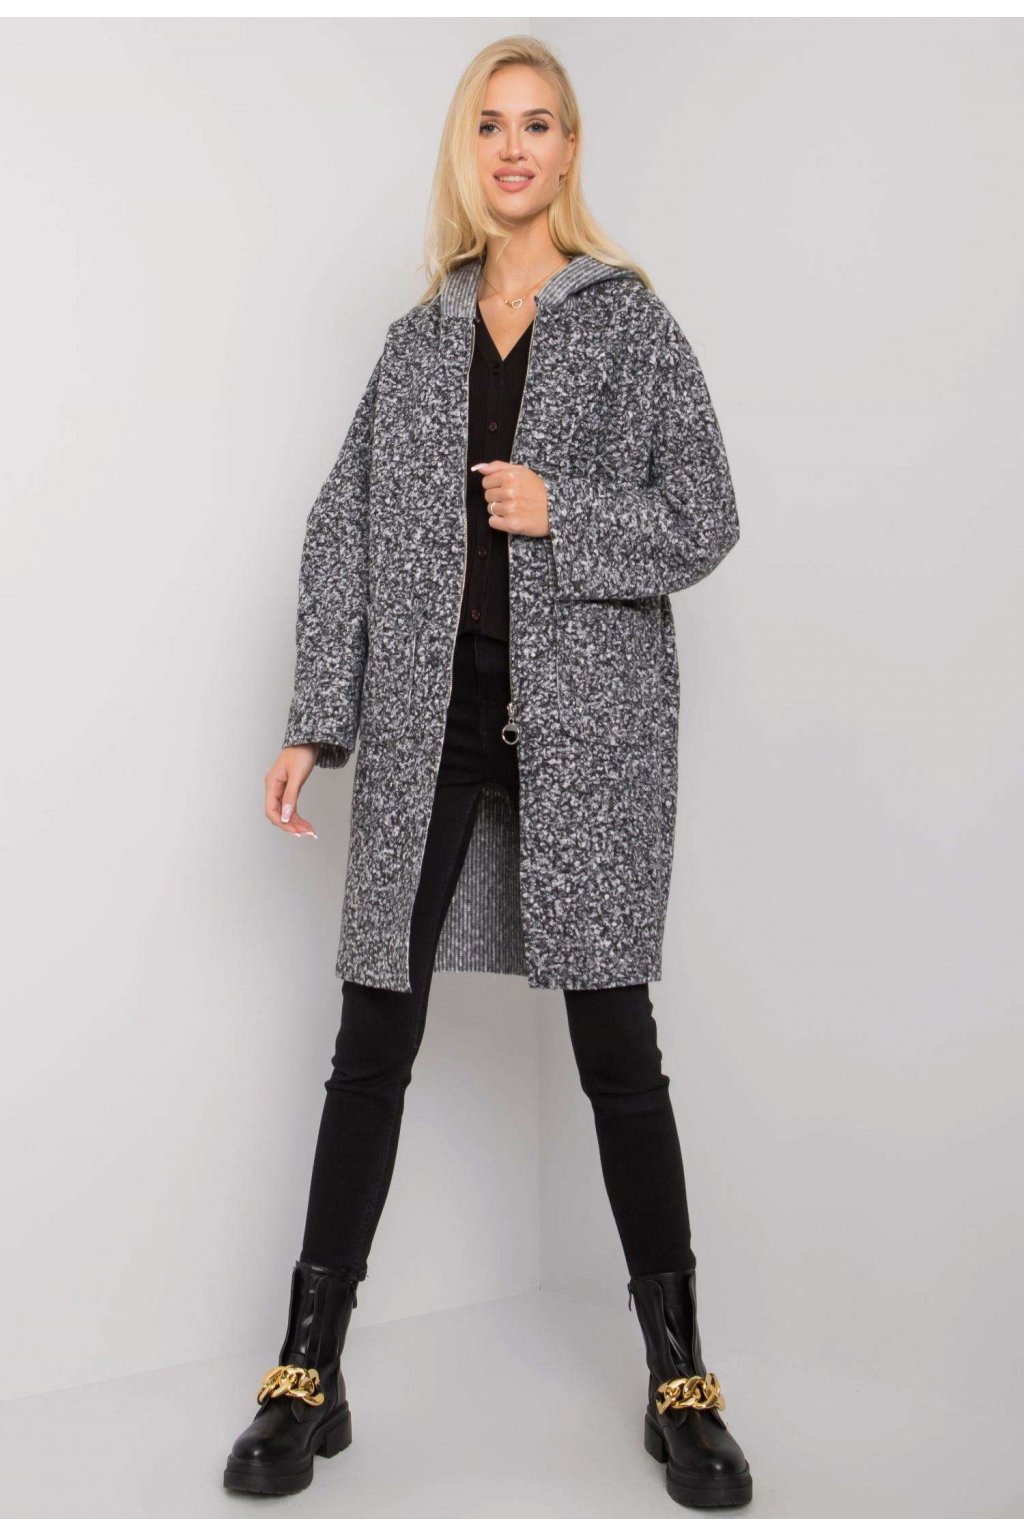 Šedý dámský kabát | FASHIONSUGAR e-shop